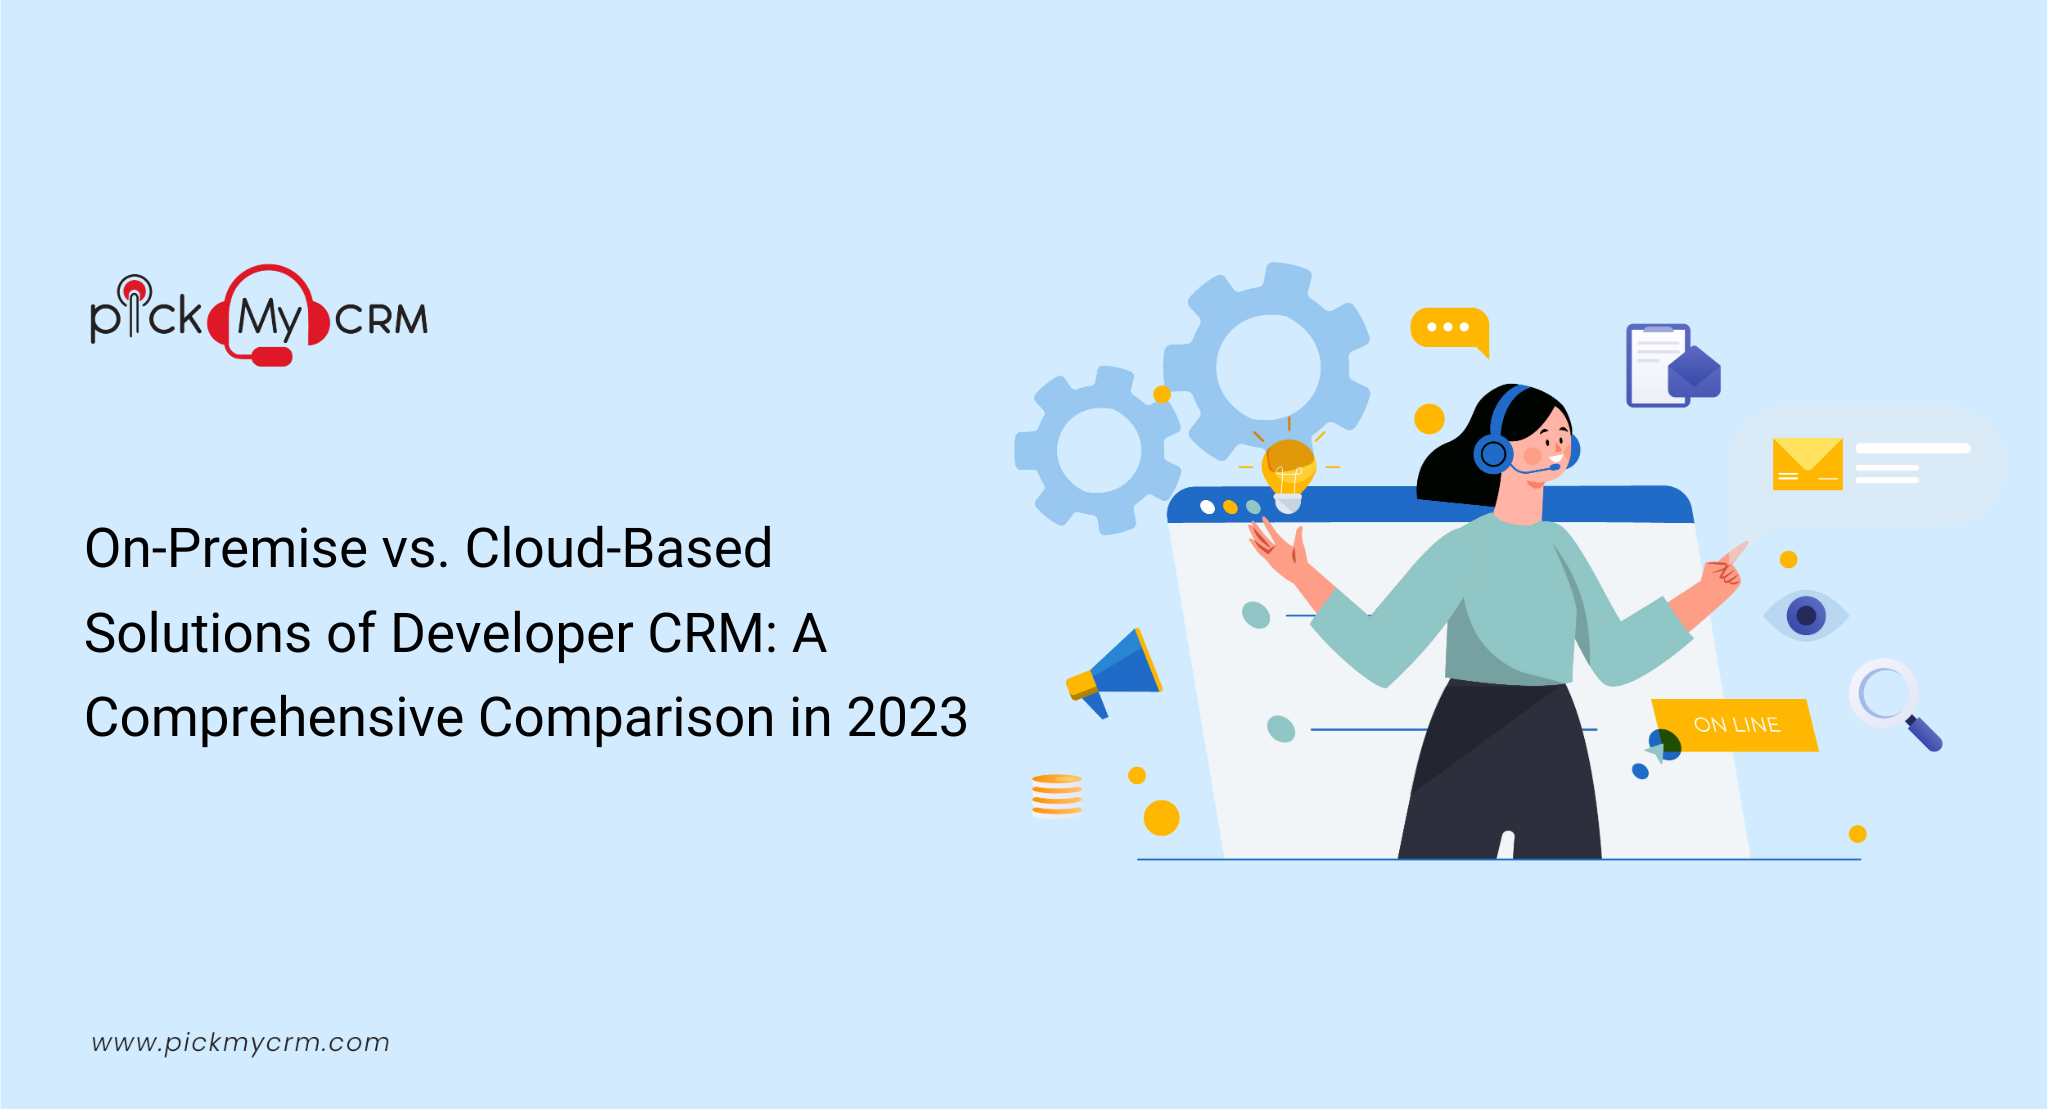 On-Premise vs. Cloud-Based Solutions of Developer CRM: A Comprehensive Comparison in 2023